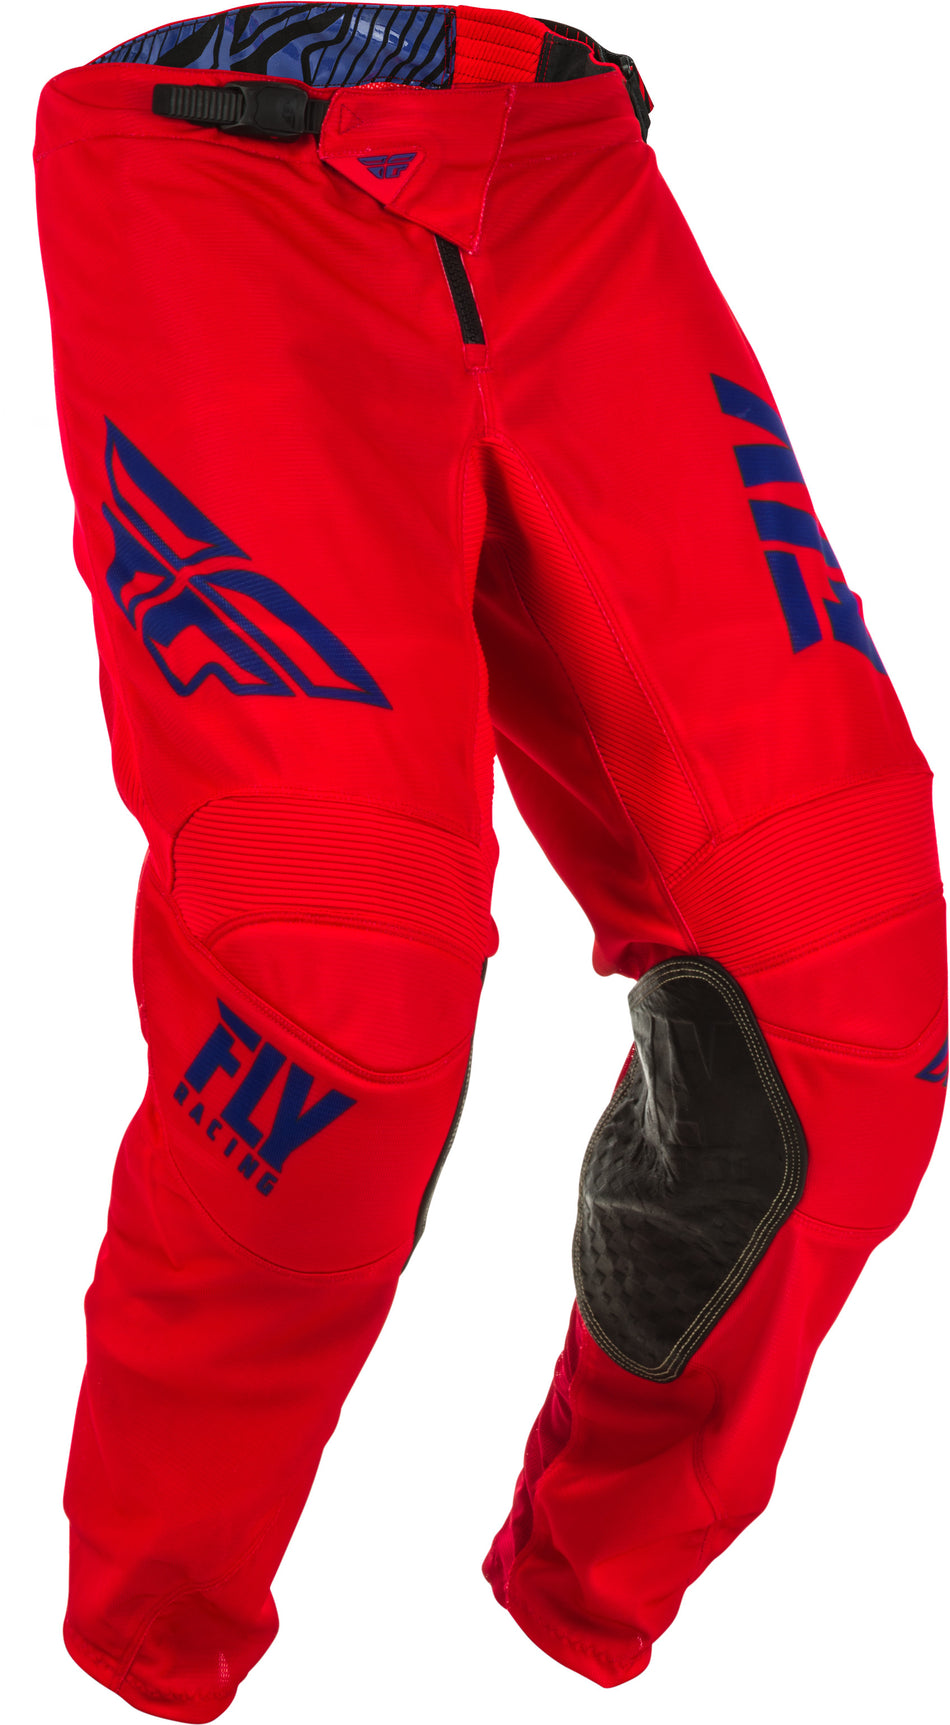 FLY RACING Kinetic Mesh Shield Pants Red/Blue Sz 30 373-32230